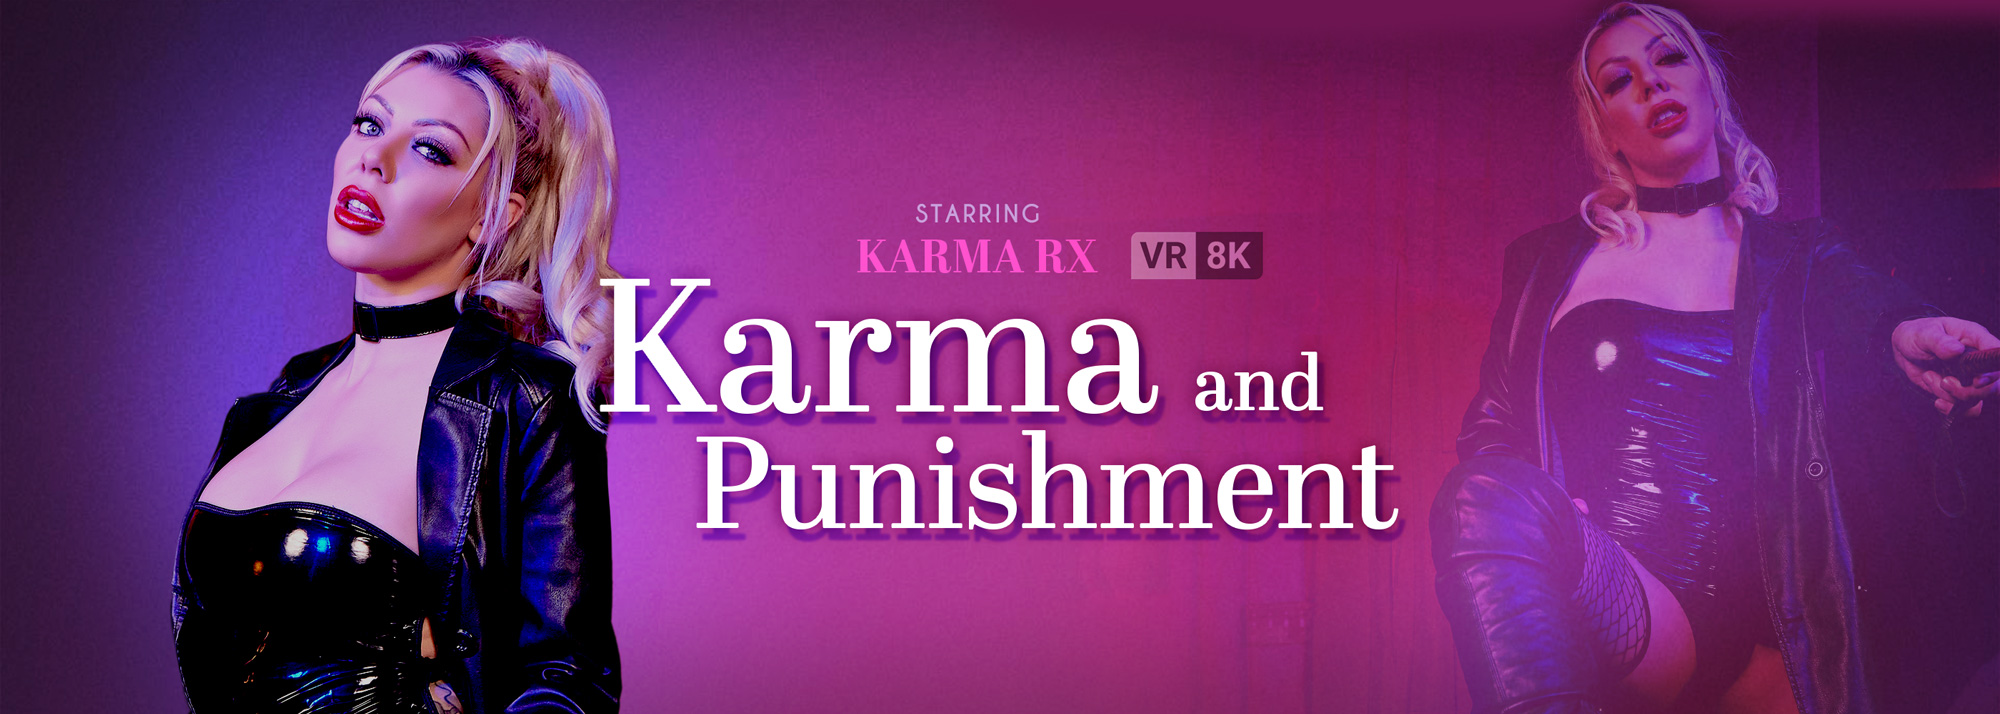 Karma and Punishment - VR Porn Video, Starring: Karma Rx